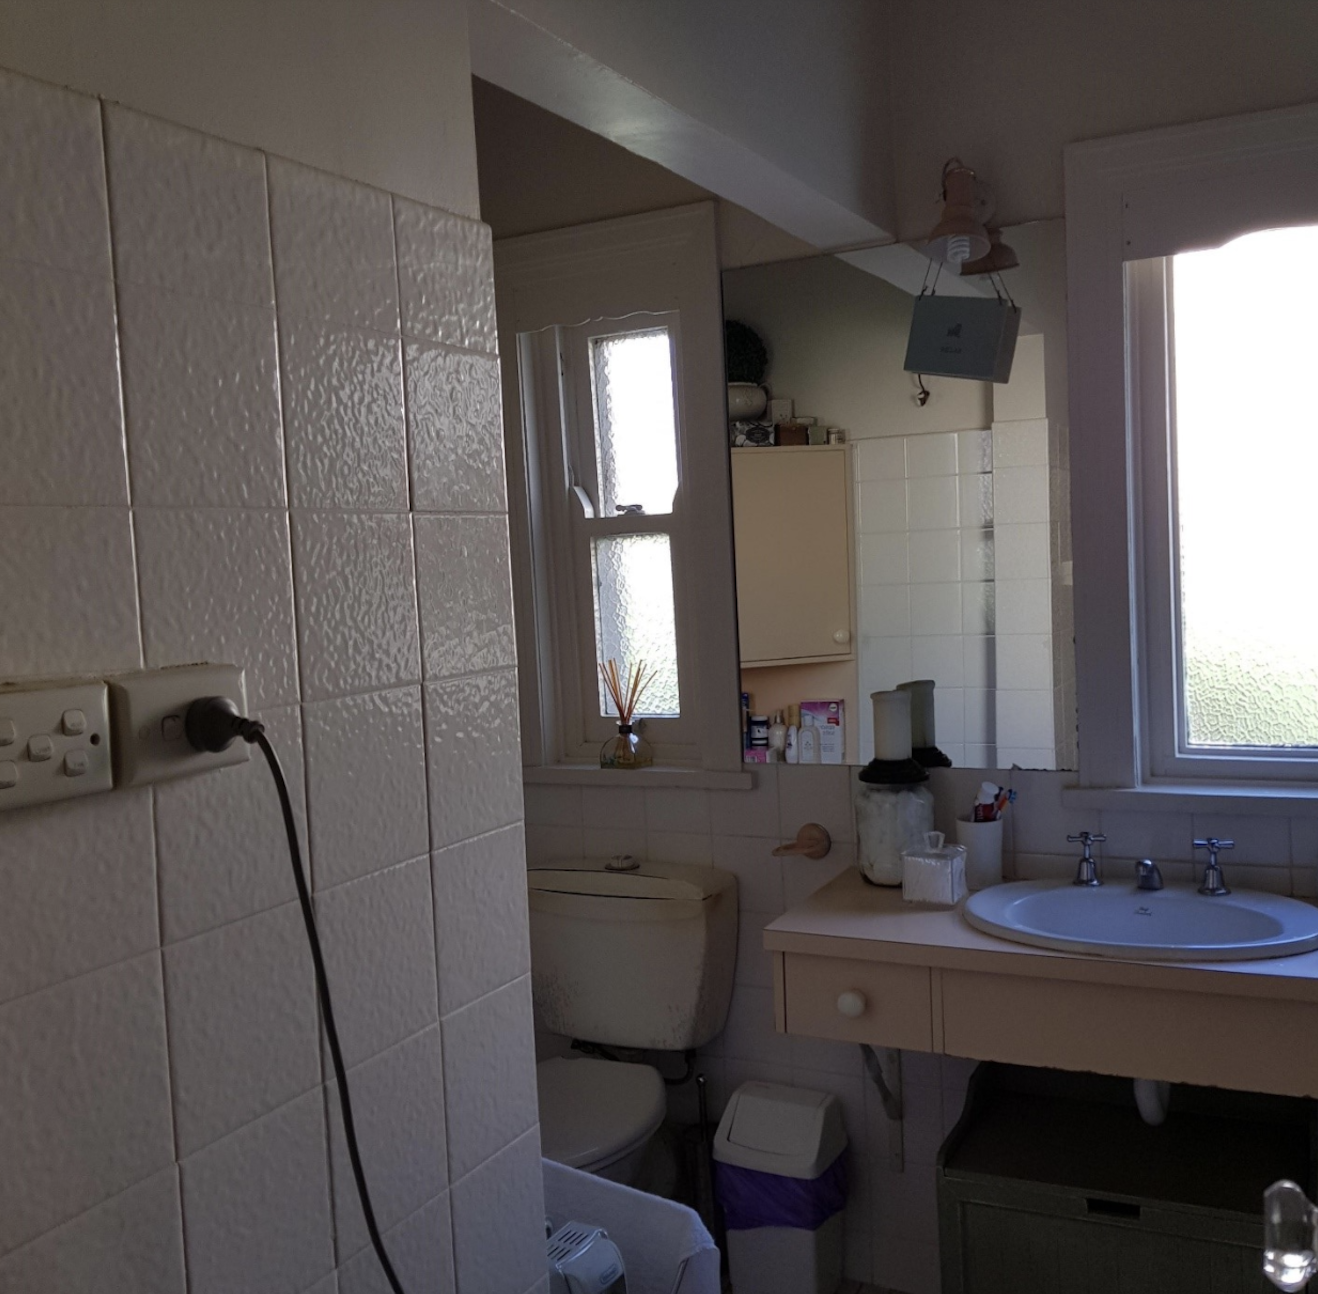 original 1930s bathroom before renovation strange power points off-center mirror